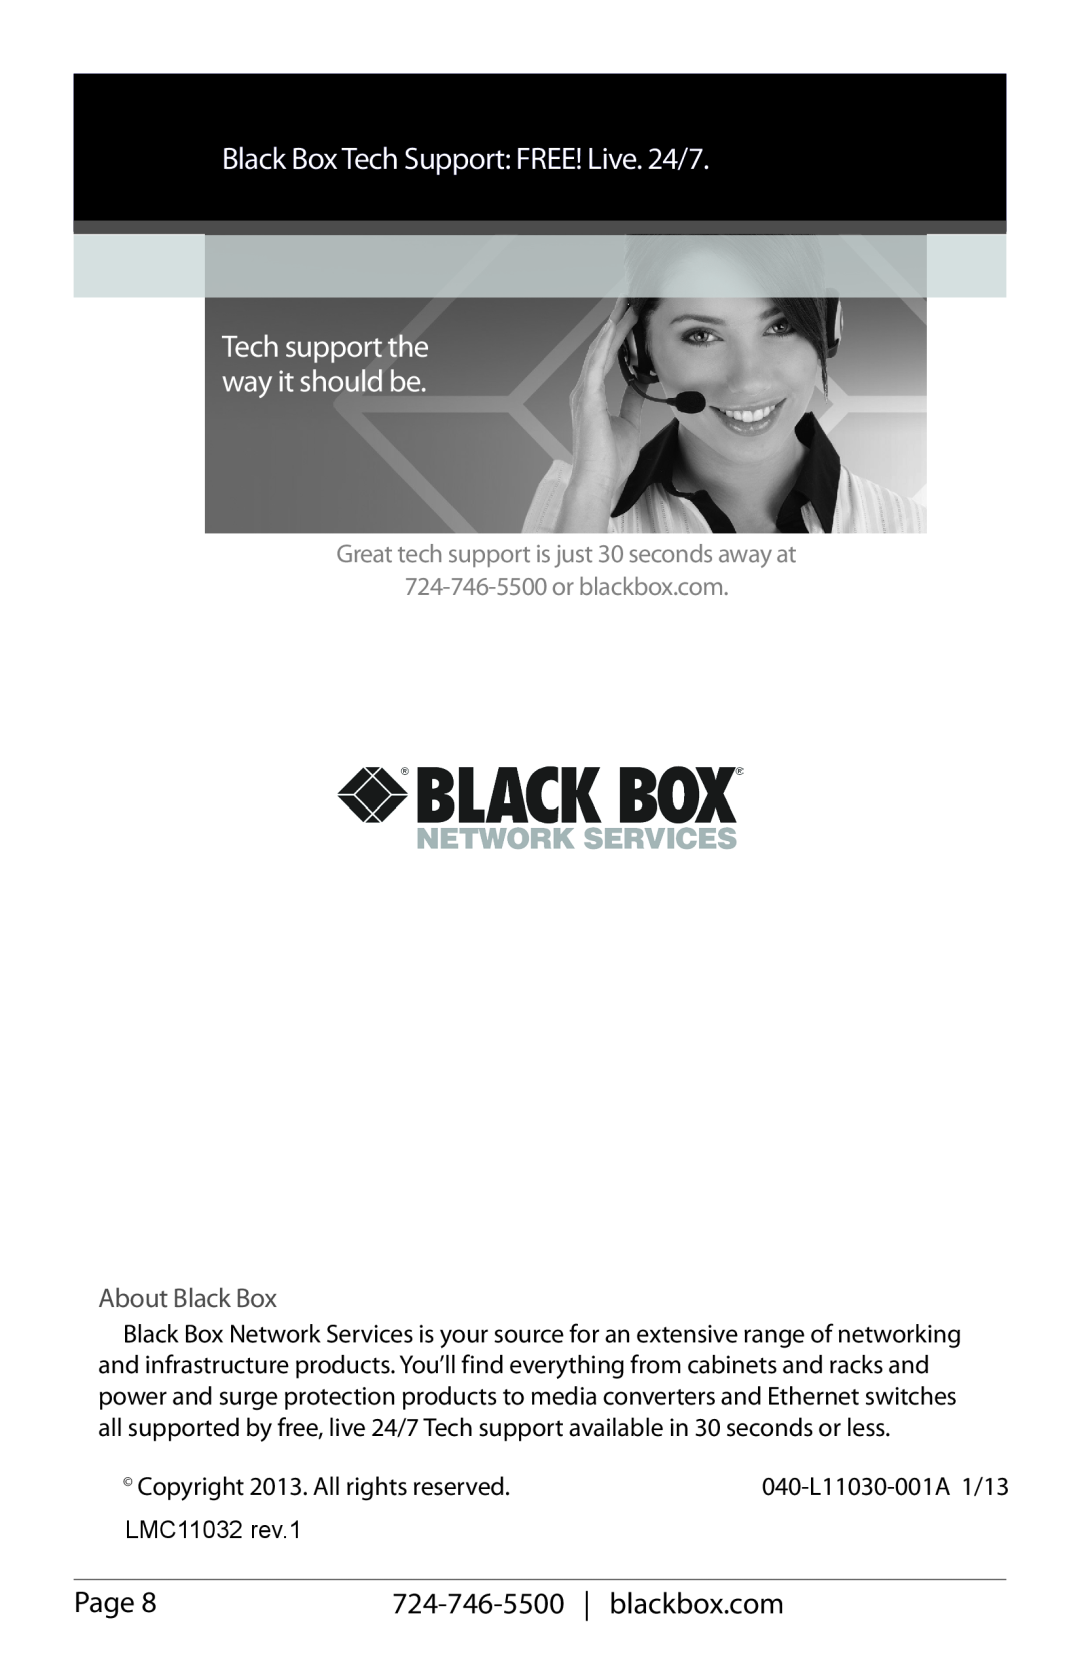 Black Box LMC11032A manual Black Box Tech Support: FREE! Live. 24/7, About Black Box, Page, blackbox.com 